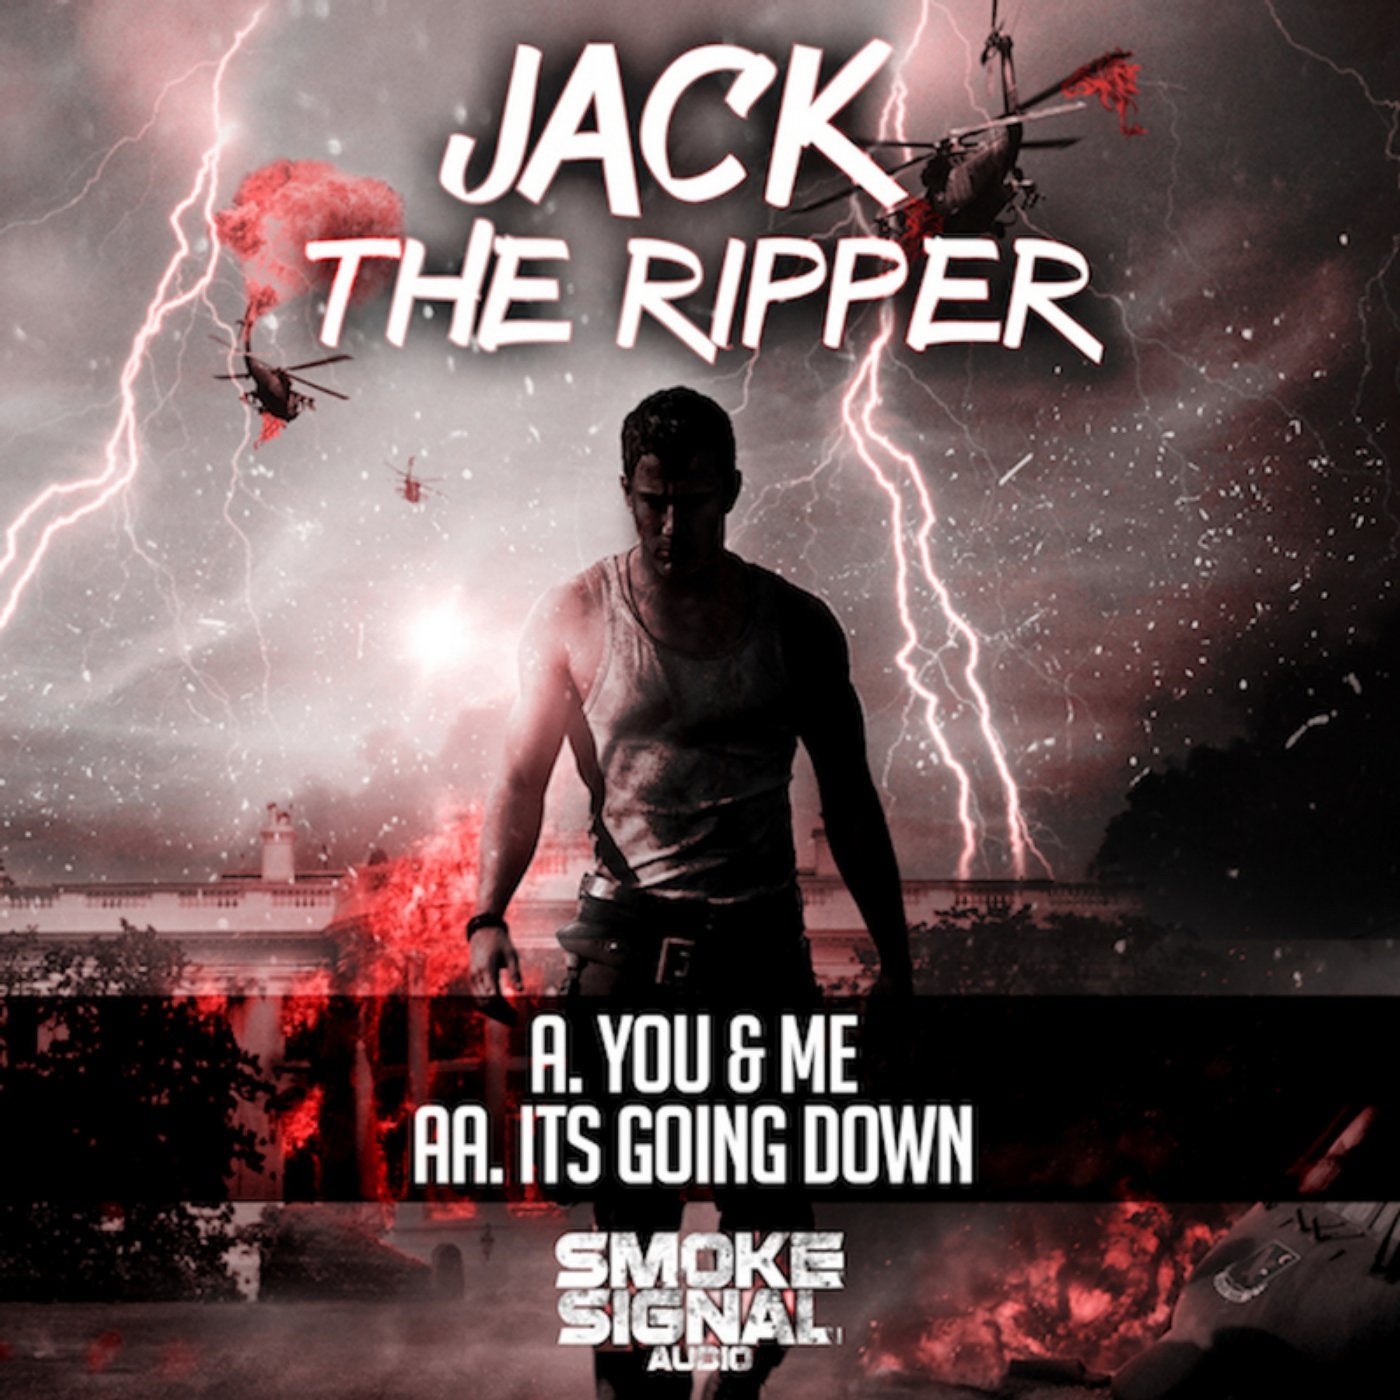 Ripper Music. Jack 1t Origin down. It's going down.